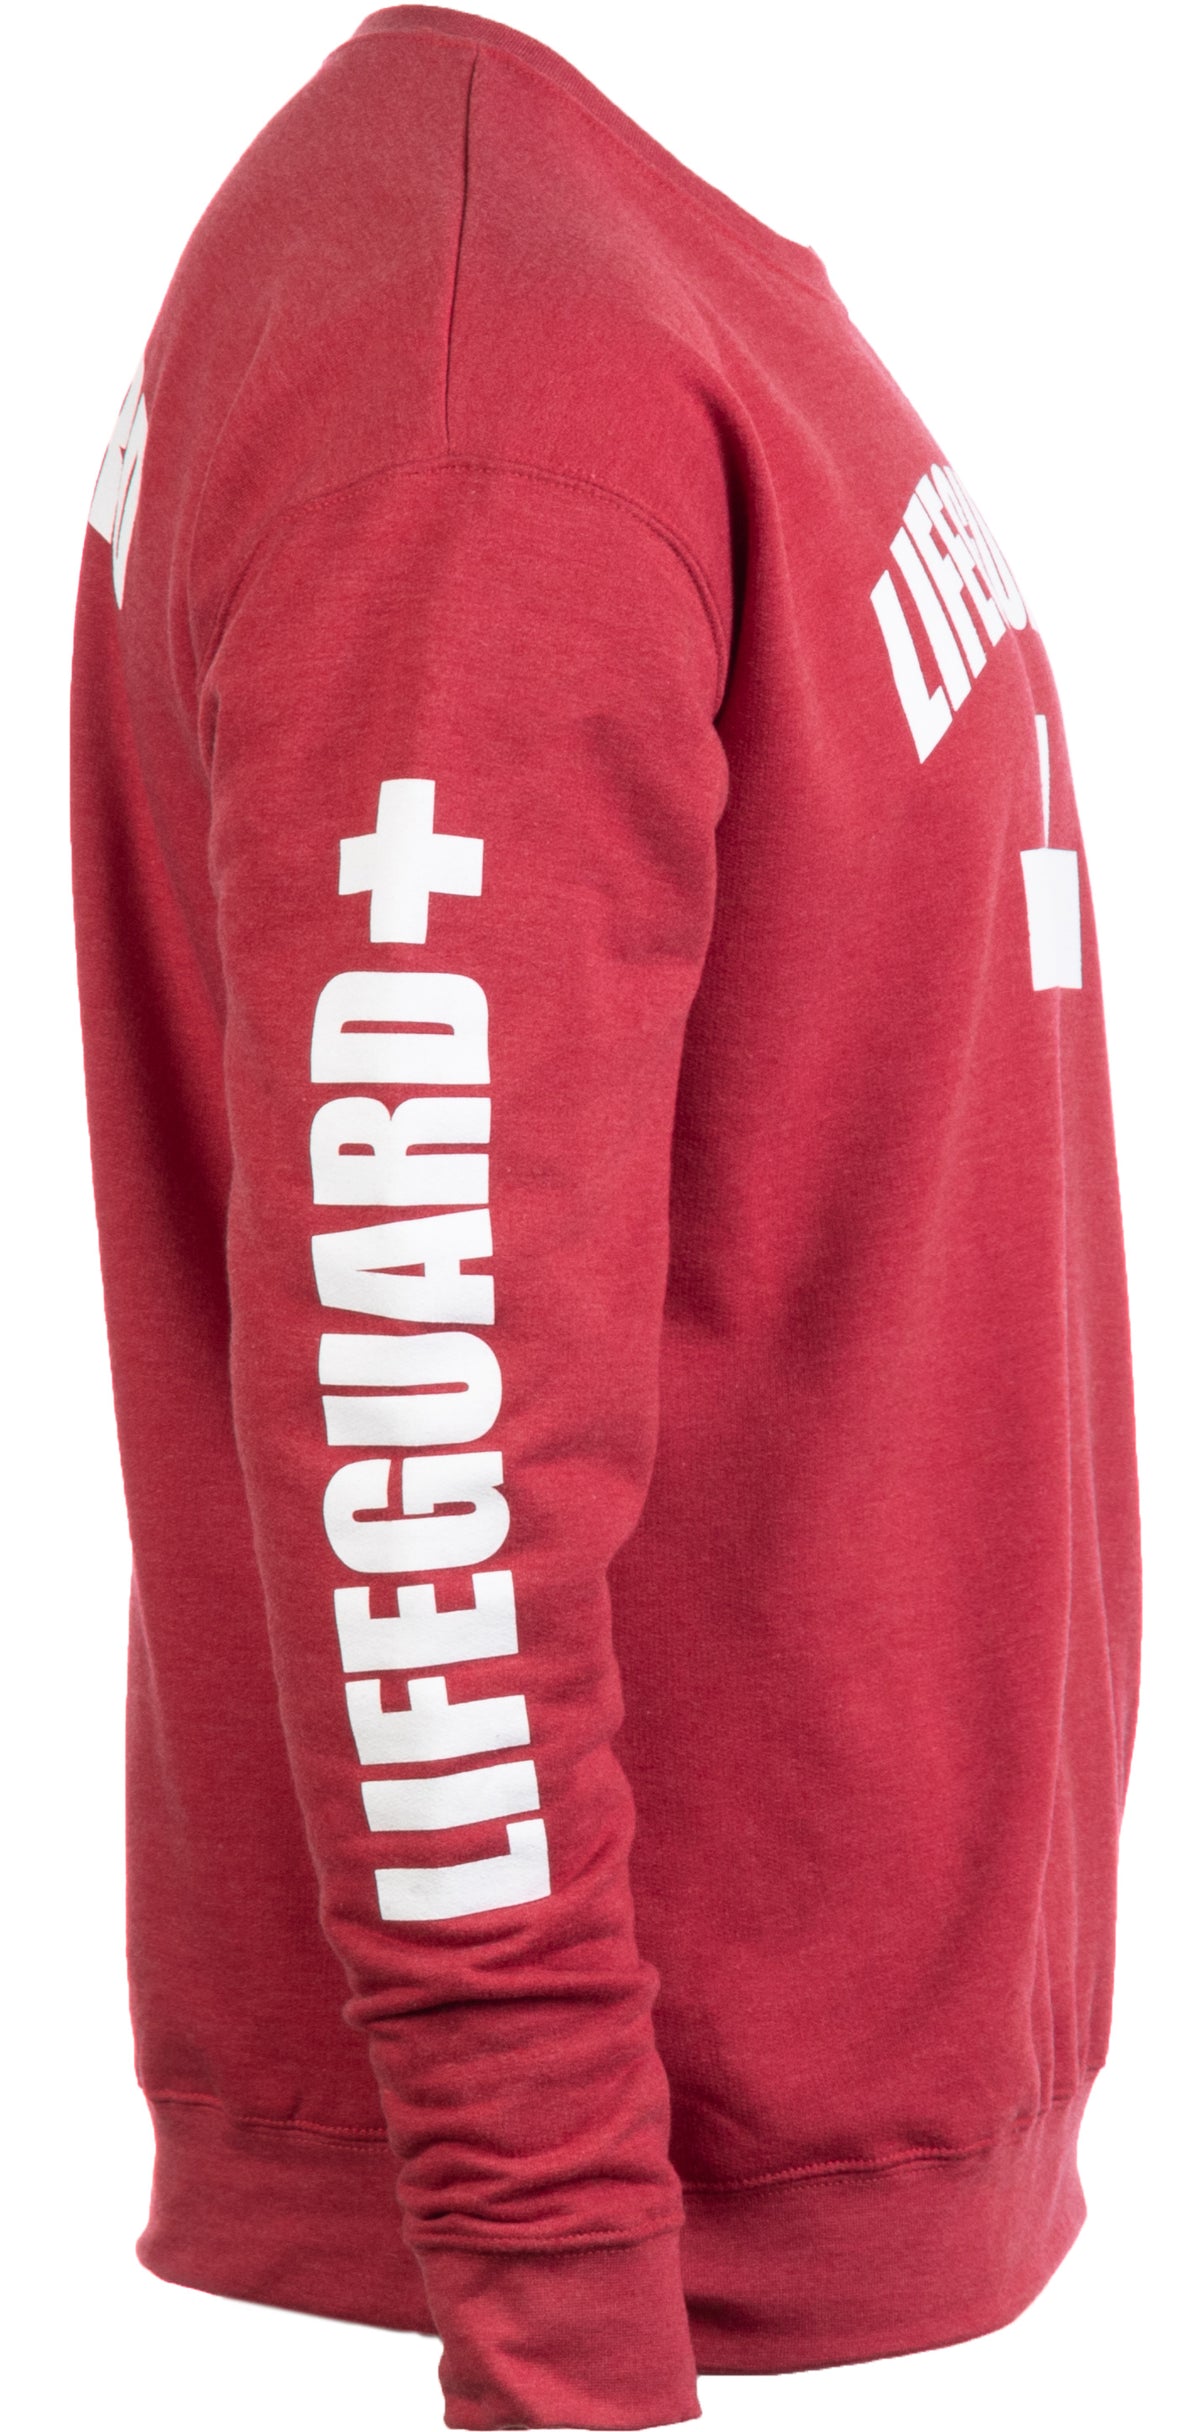 LIFEGUARD | Red Unisex Uniform Fleece Sweatshirt Crewneck Sweater for Men Women